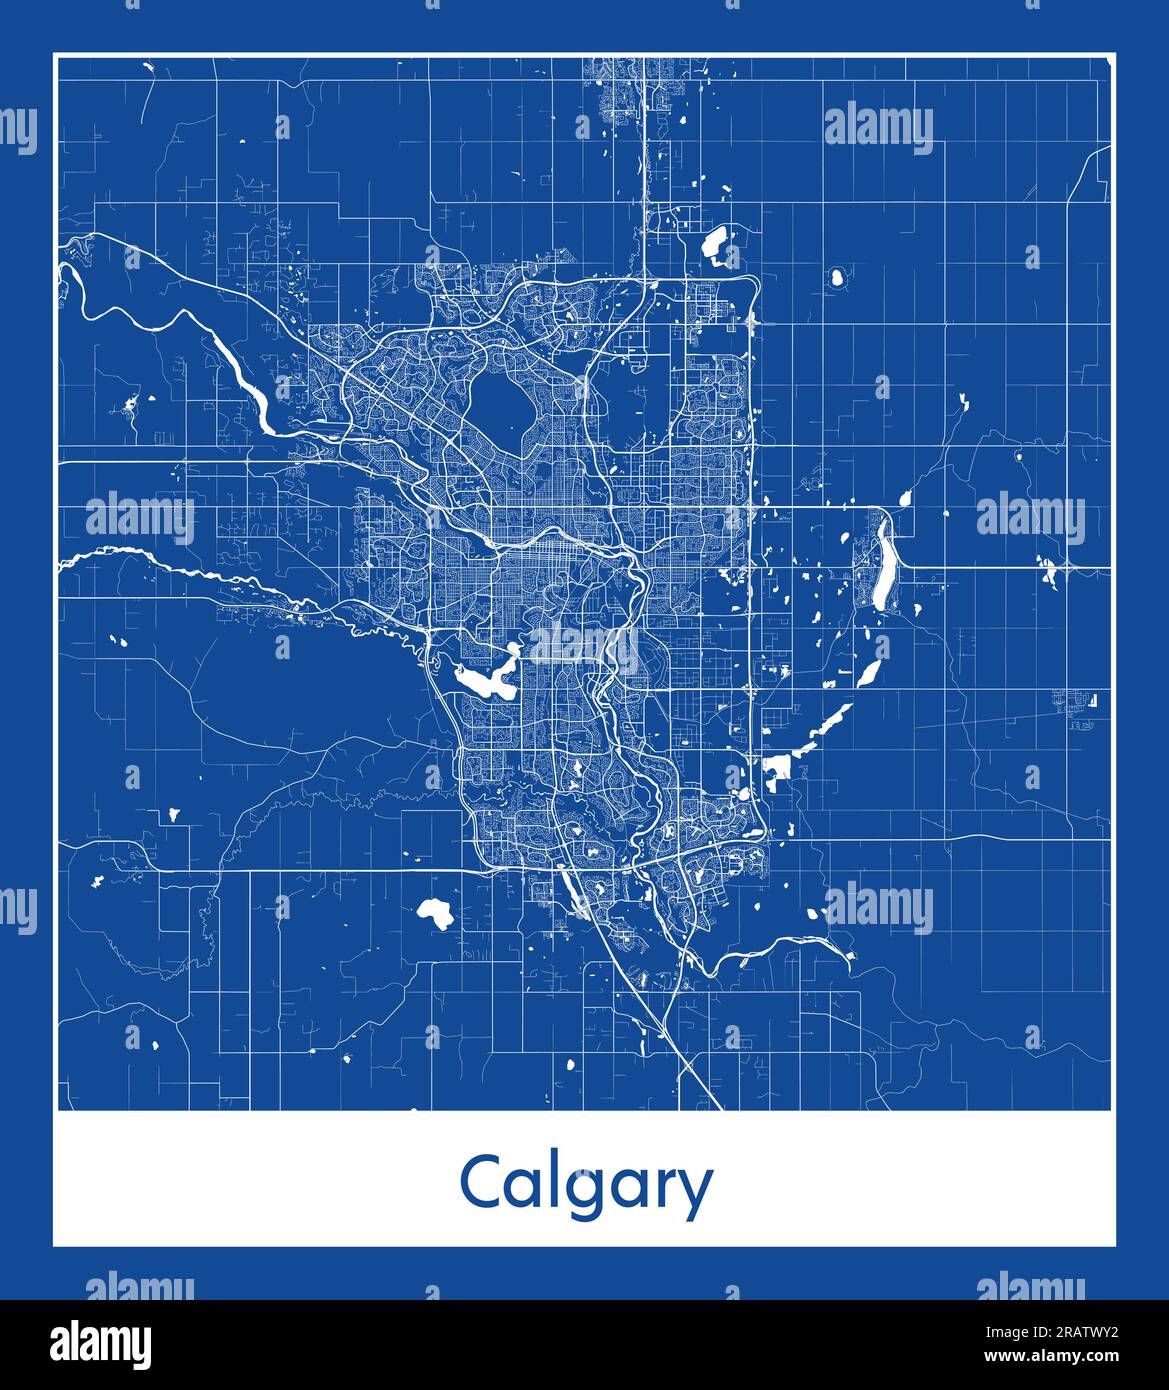 Calgary Canada North America City Karte blau gedruckt Vektordarstellung Stock Vektor